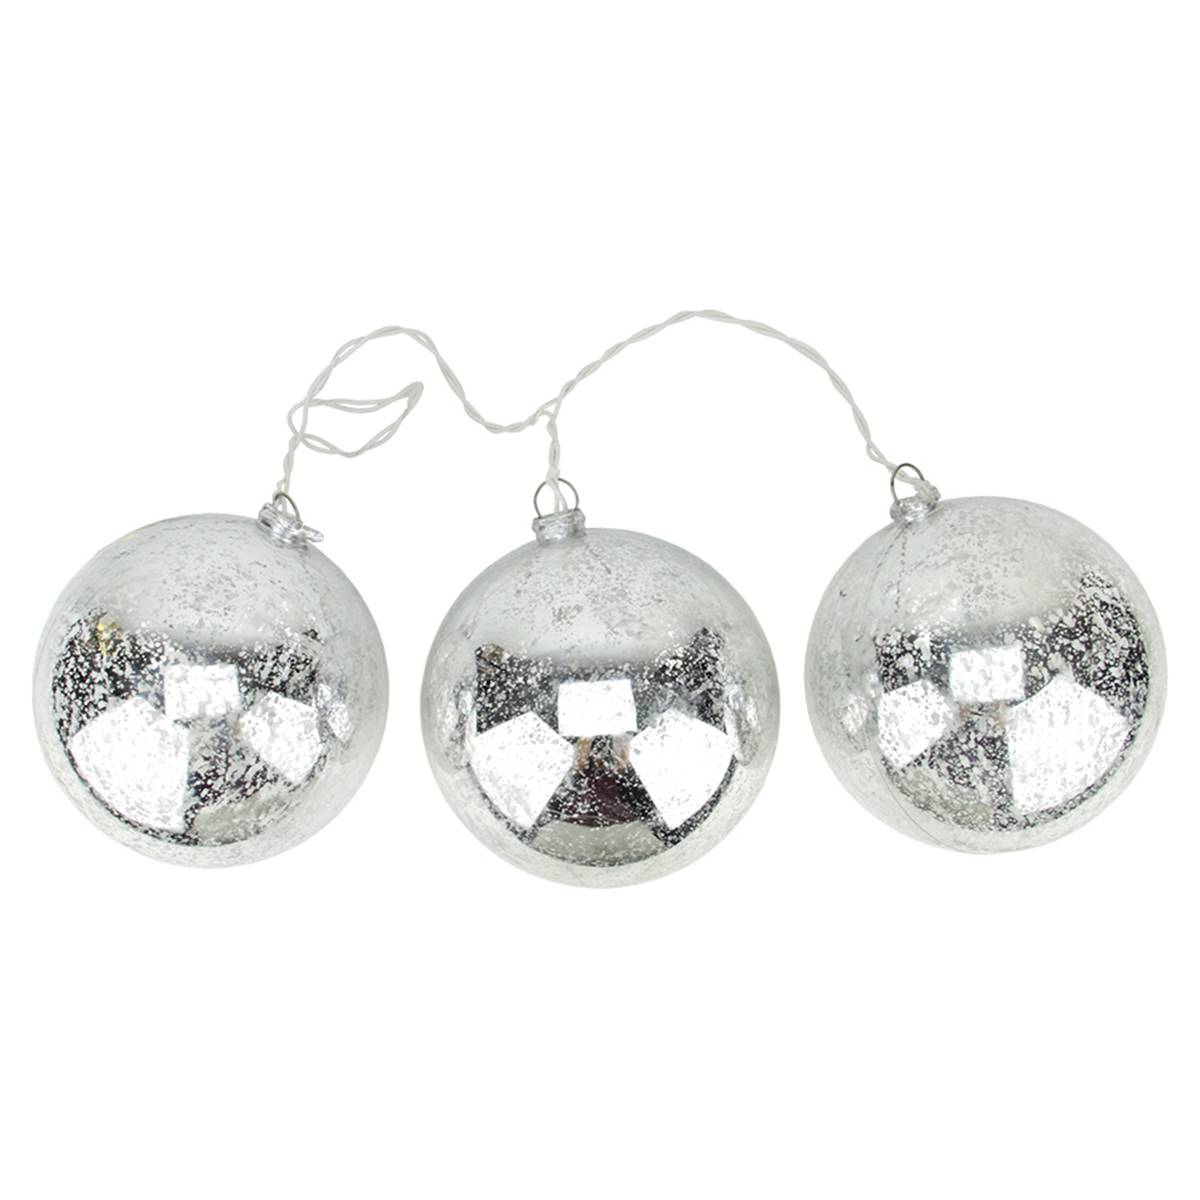 PENN Set Of 3 Silver Mercury Glass Ball Christmas Ornaments